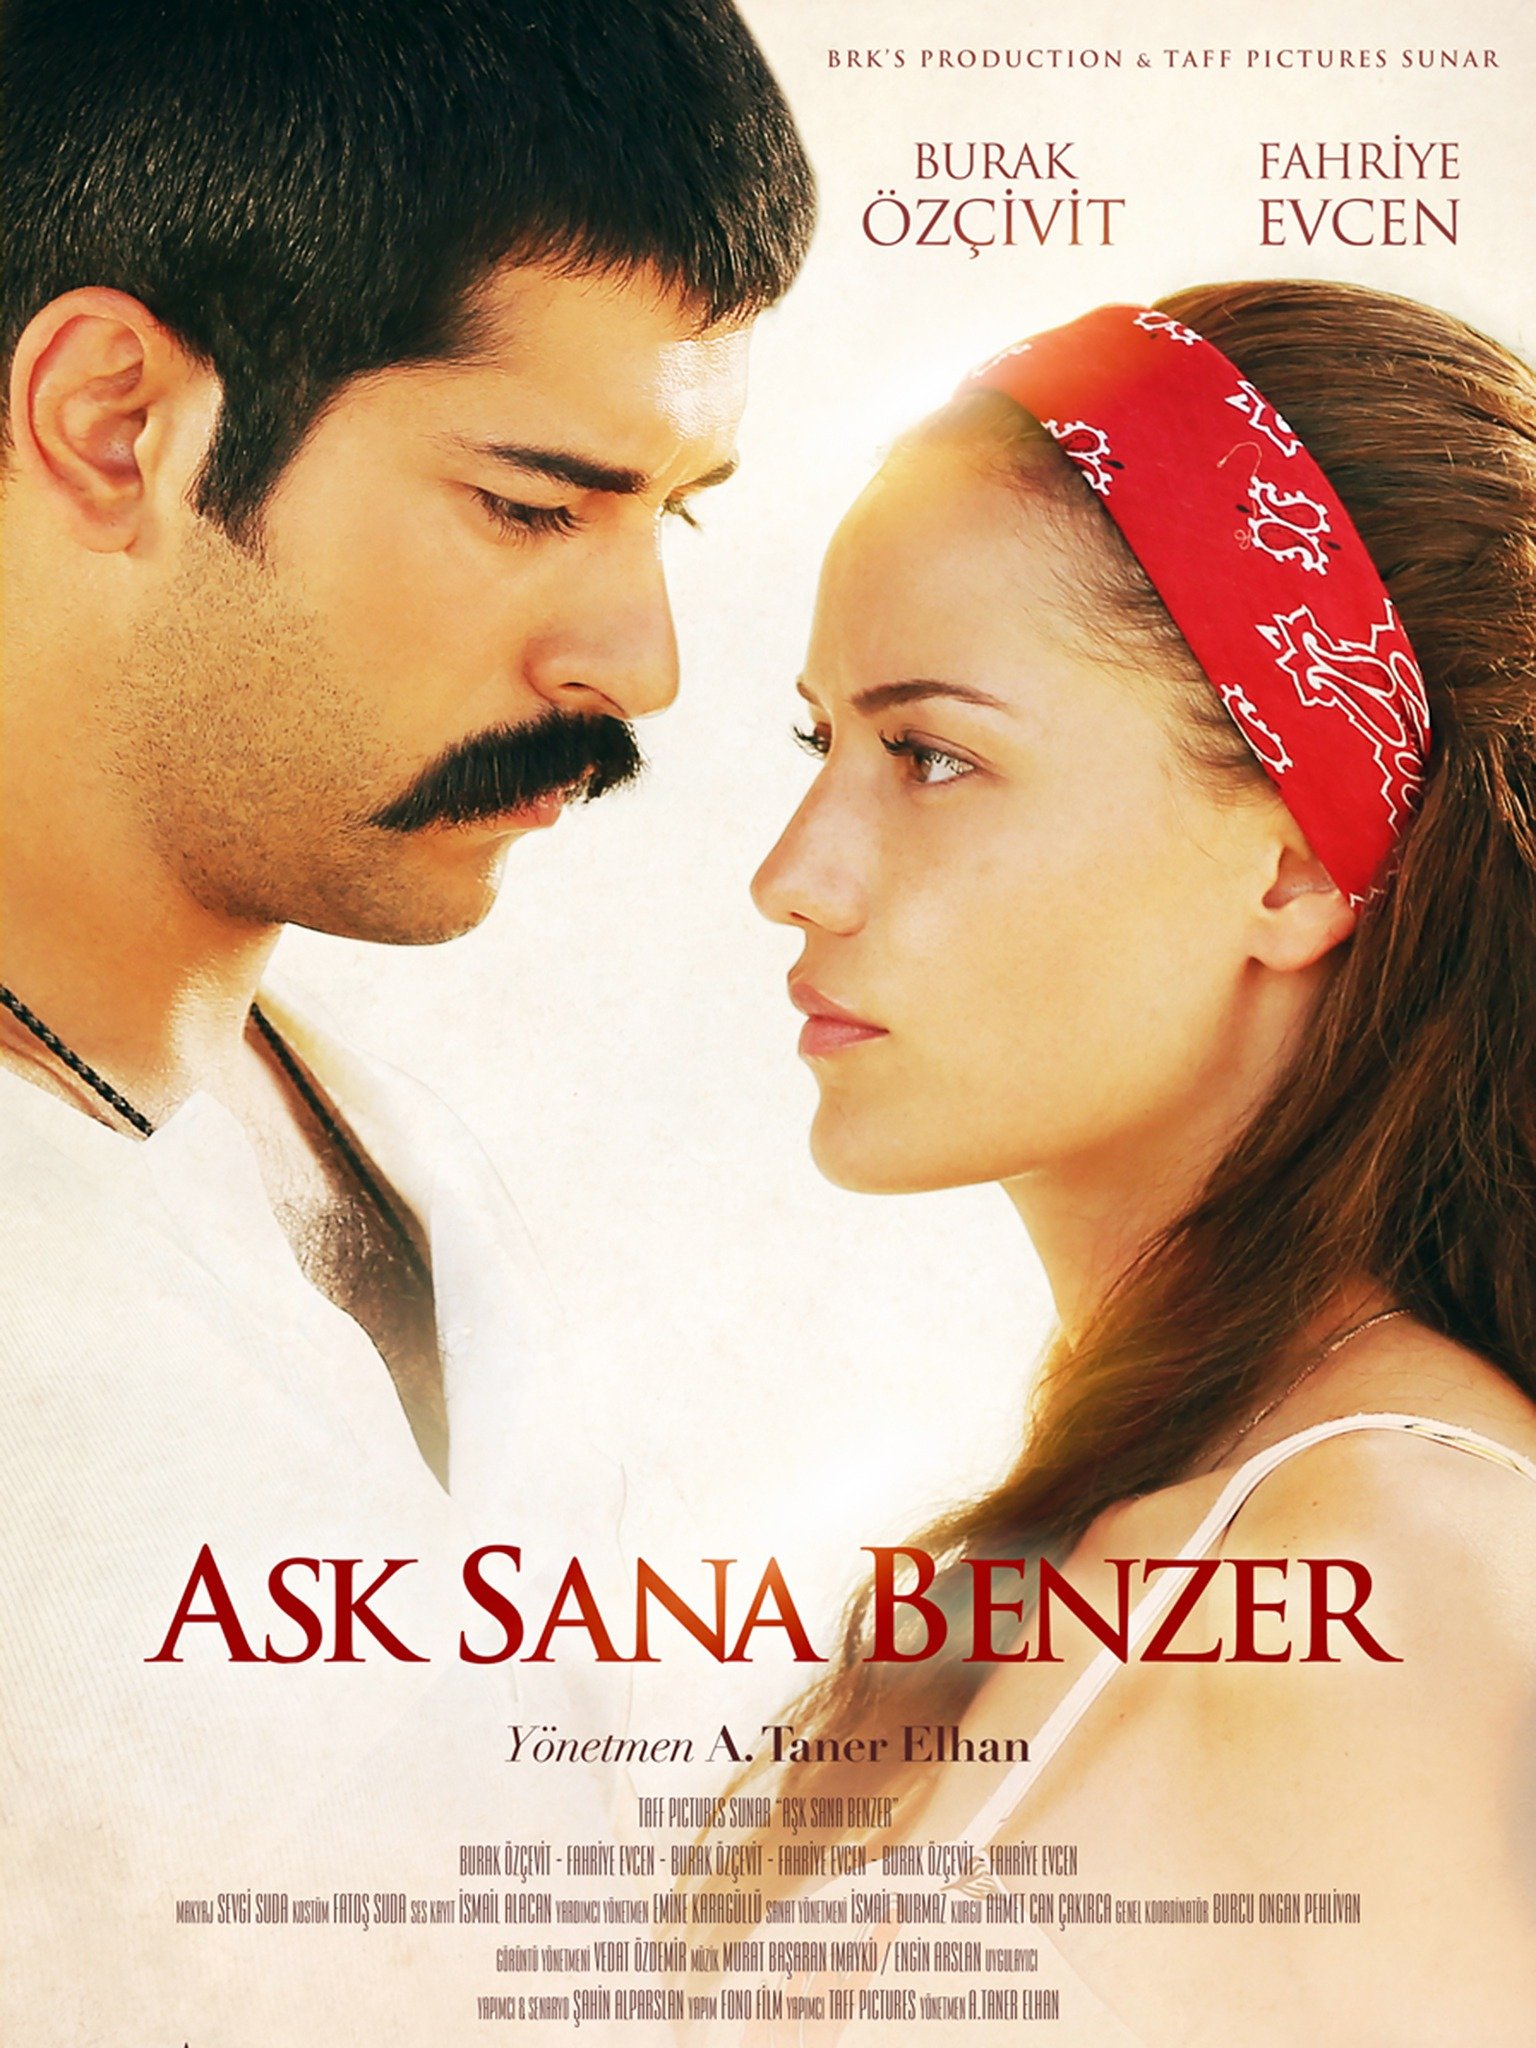 Ask Sana Benzer (2015) Main Poster